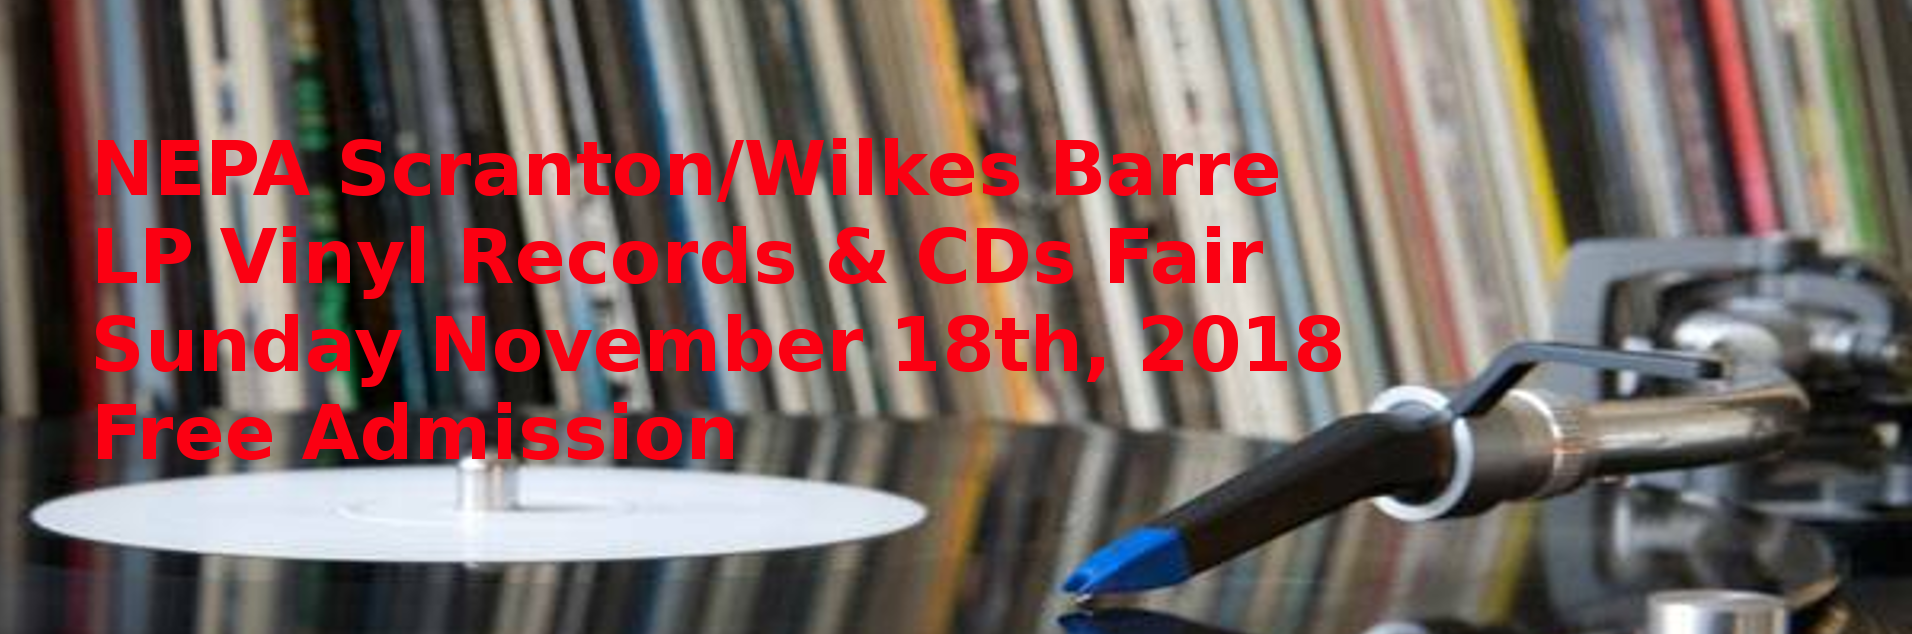 NEPA – Scranton / Wilkes-Barre Record and CD Show – Sunday November 18th 2018